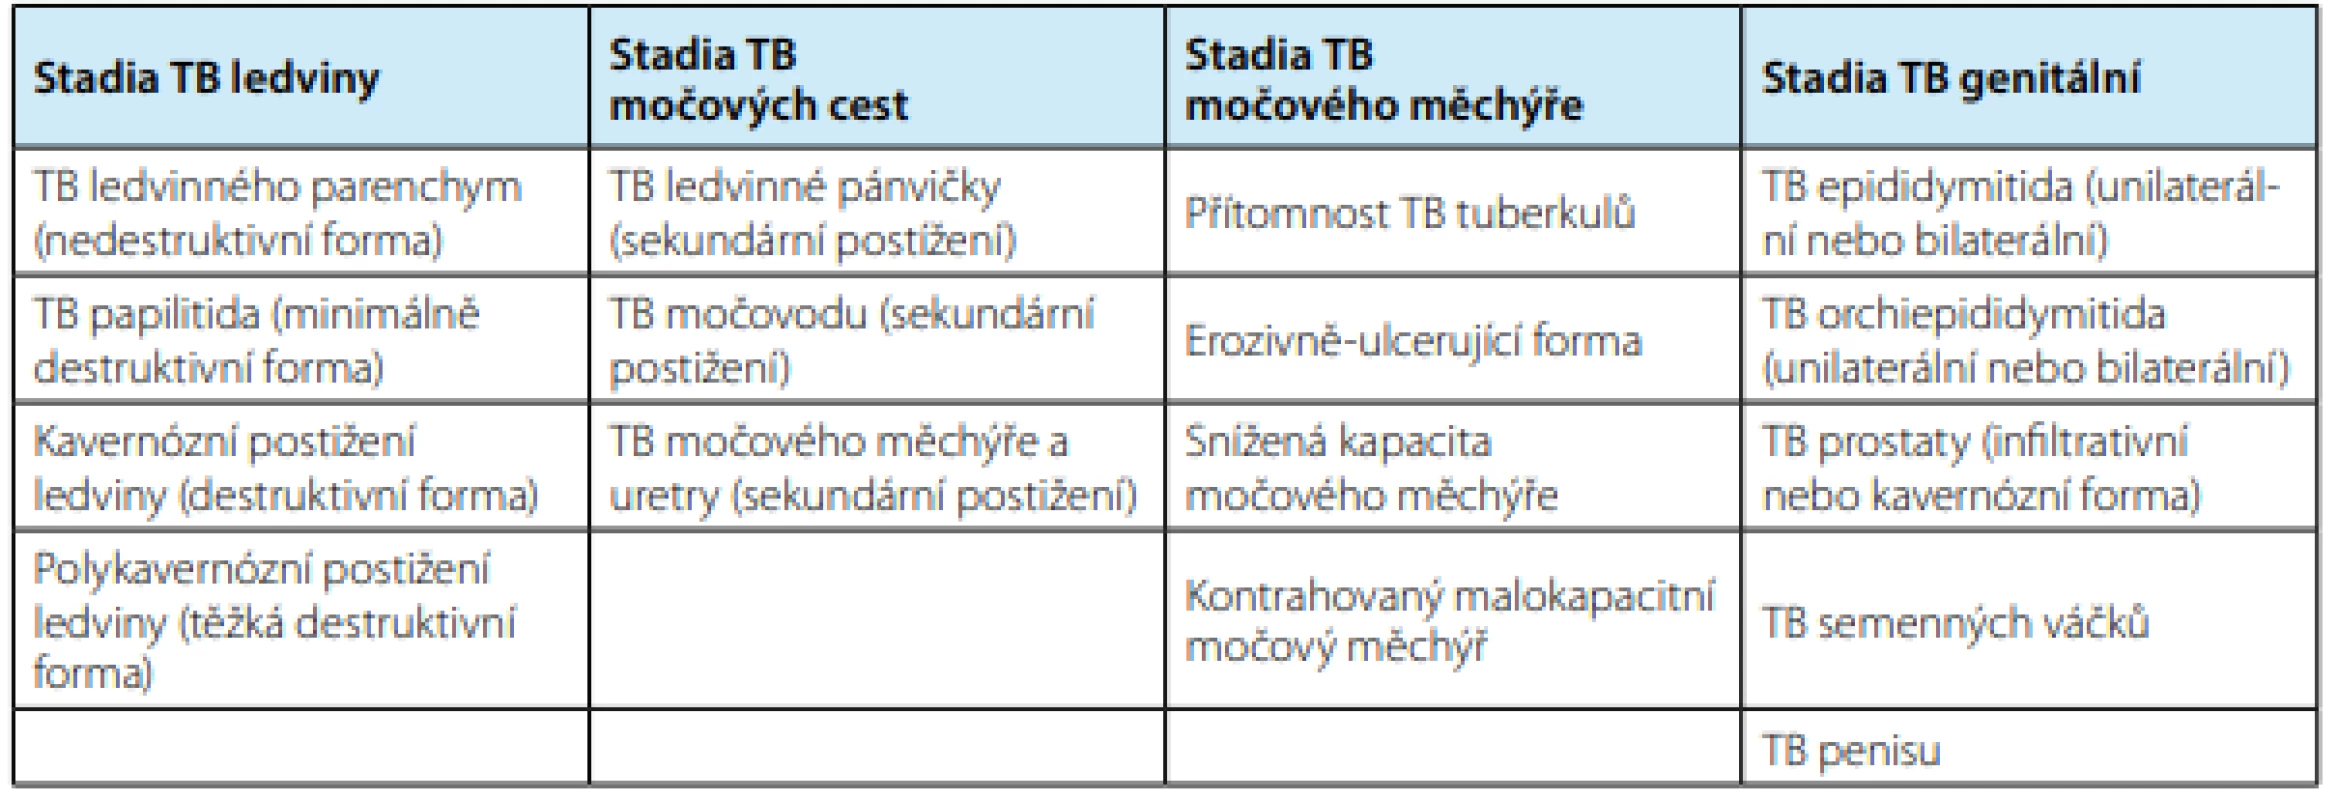 Klasifikace urogenitální tuberkulózy<br>
Tab. 1. Classification of genitourinary tuberculosis